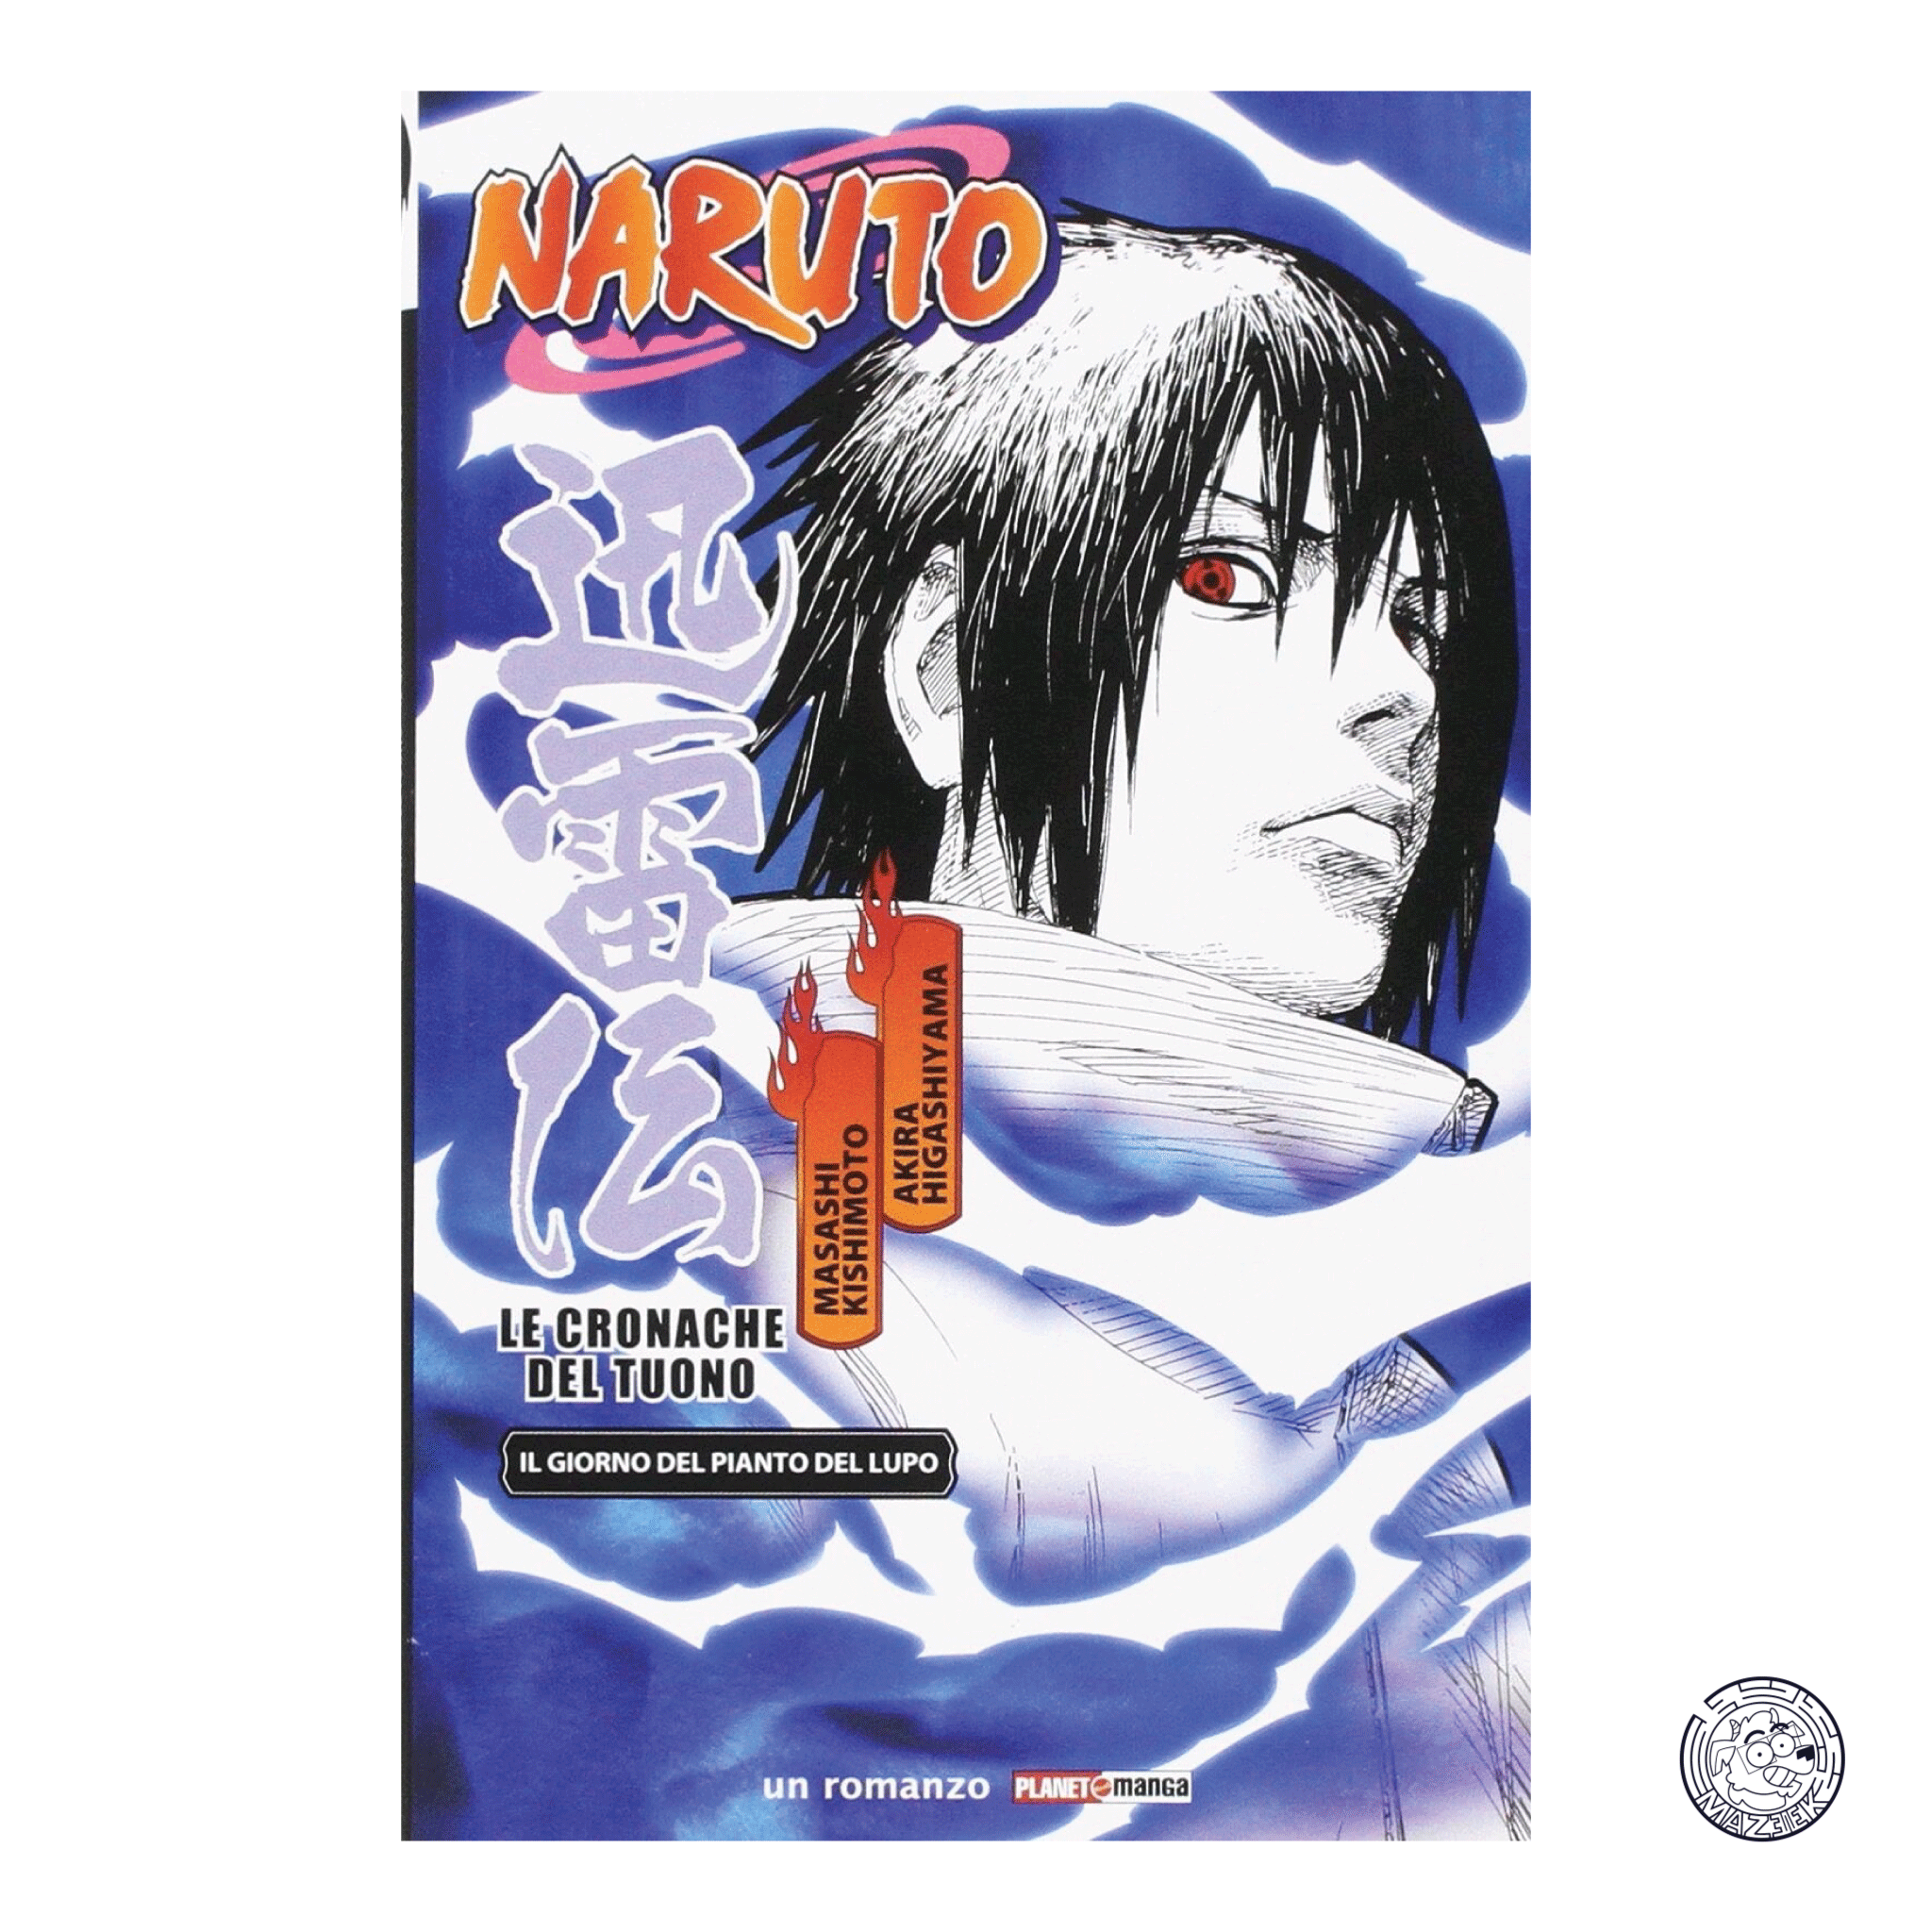 Naruto Novel 05 - Reprint 2